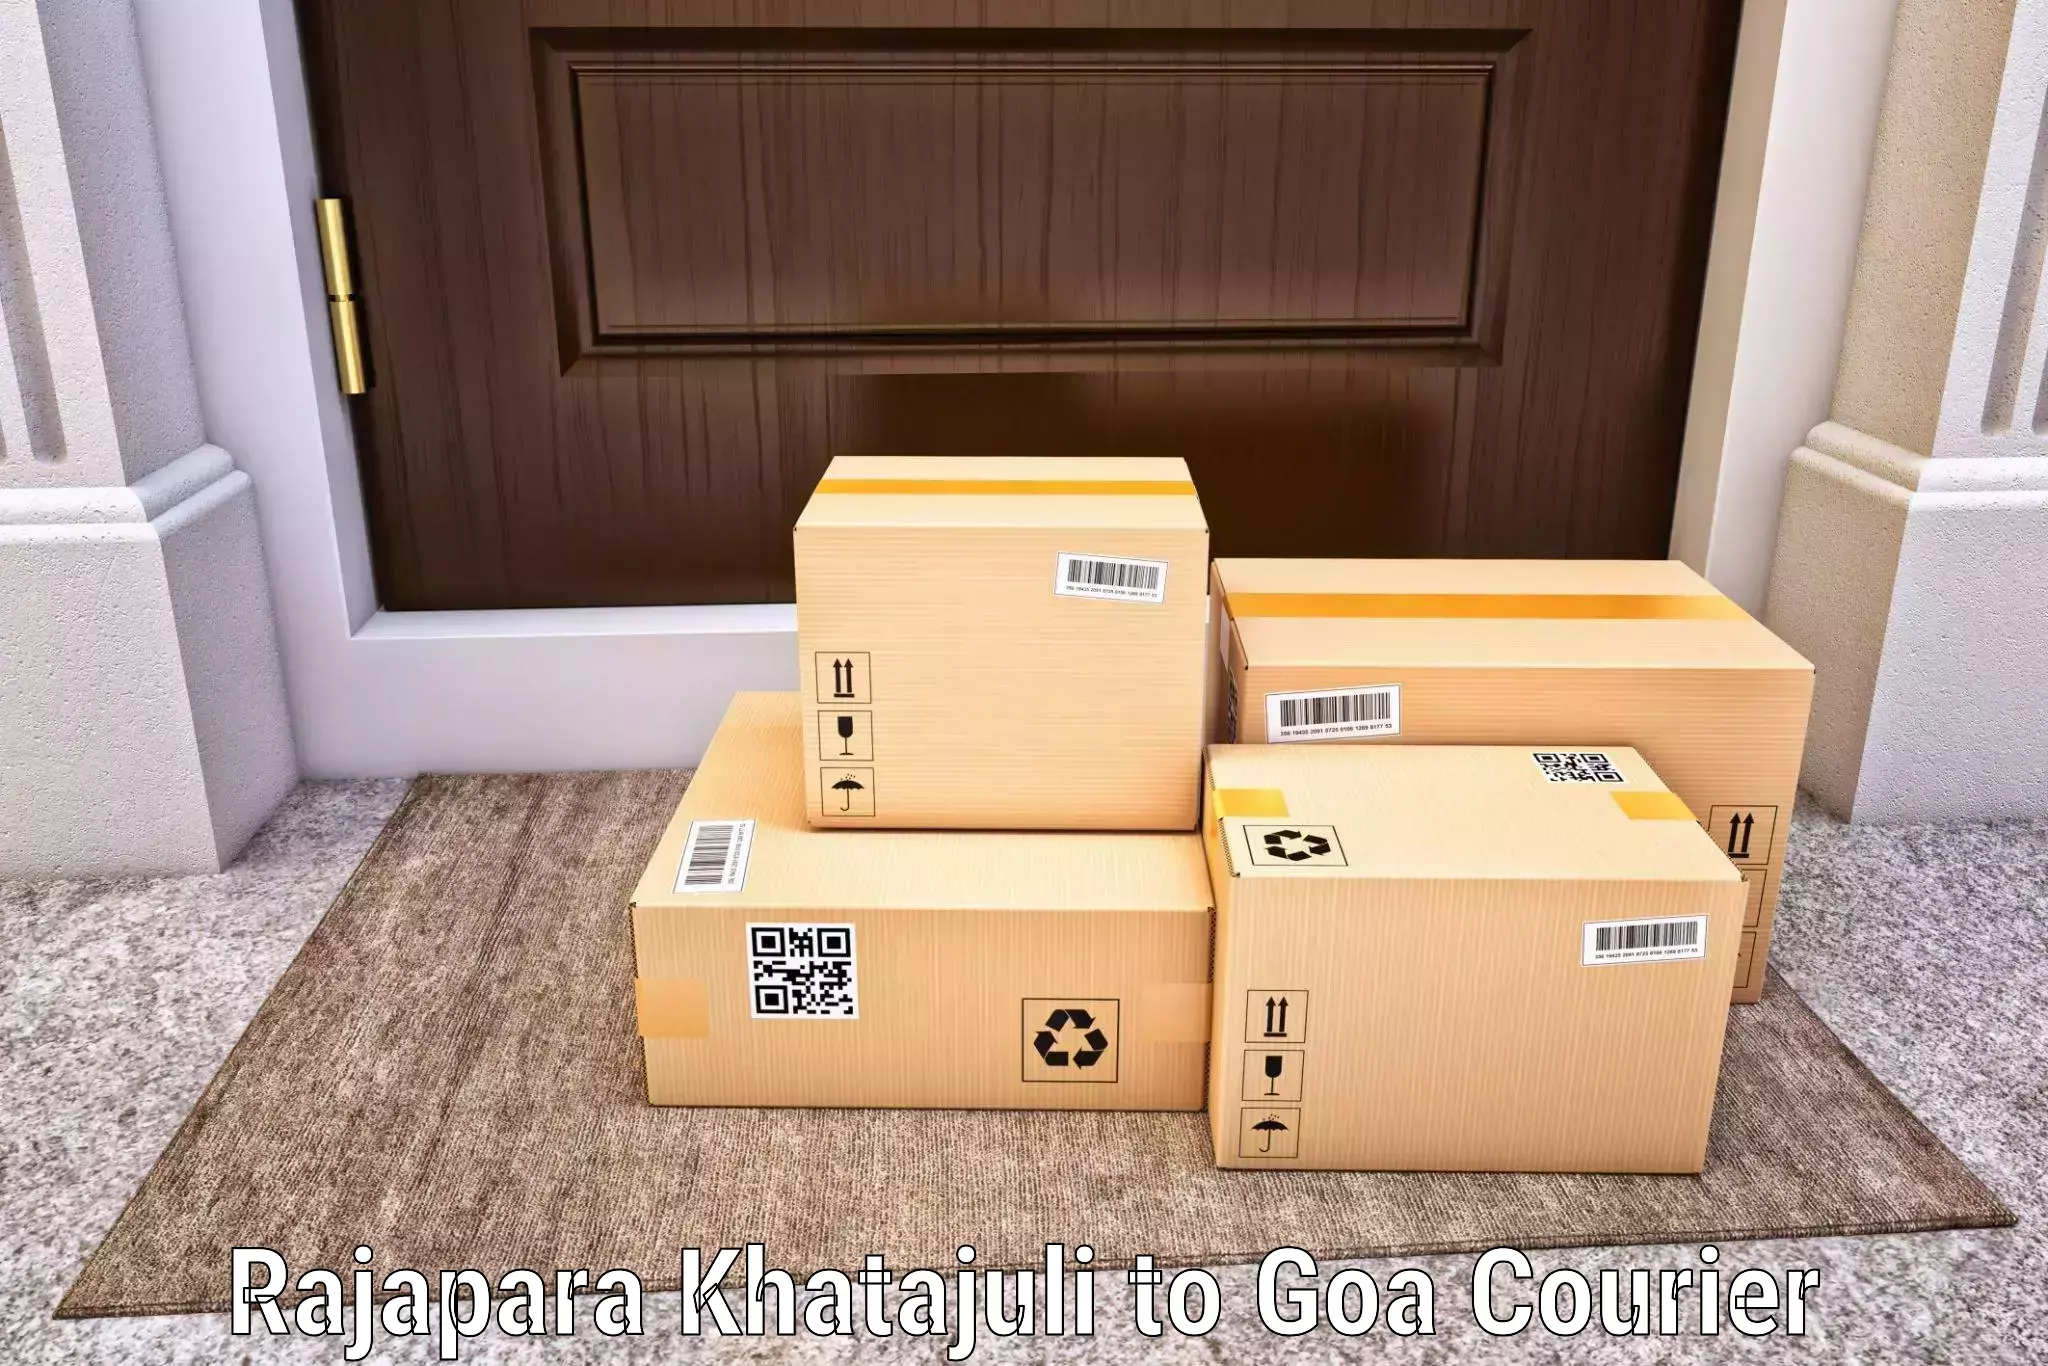 Express delivery capabilities Rajapara Khatajuli to Margao